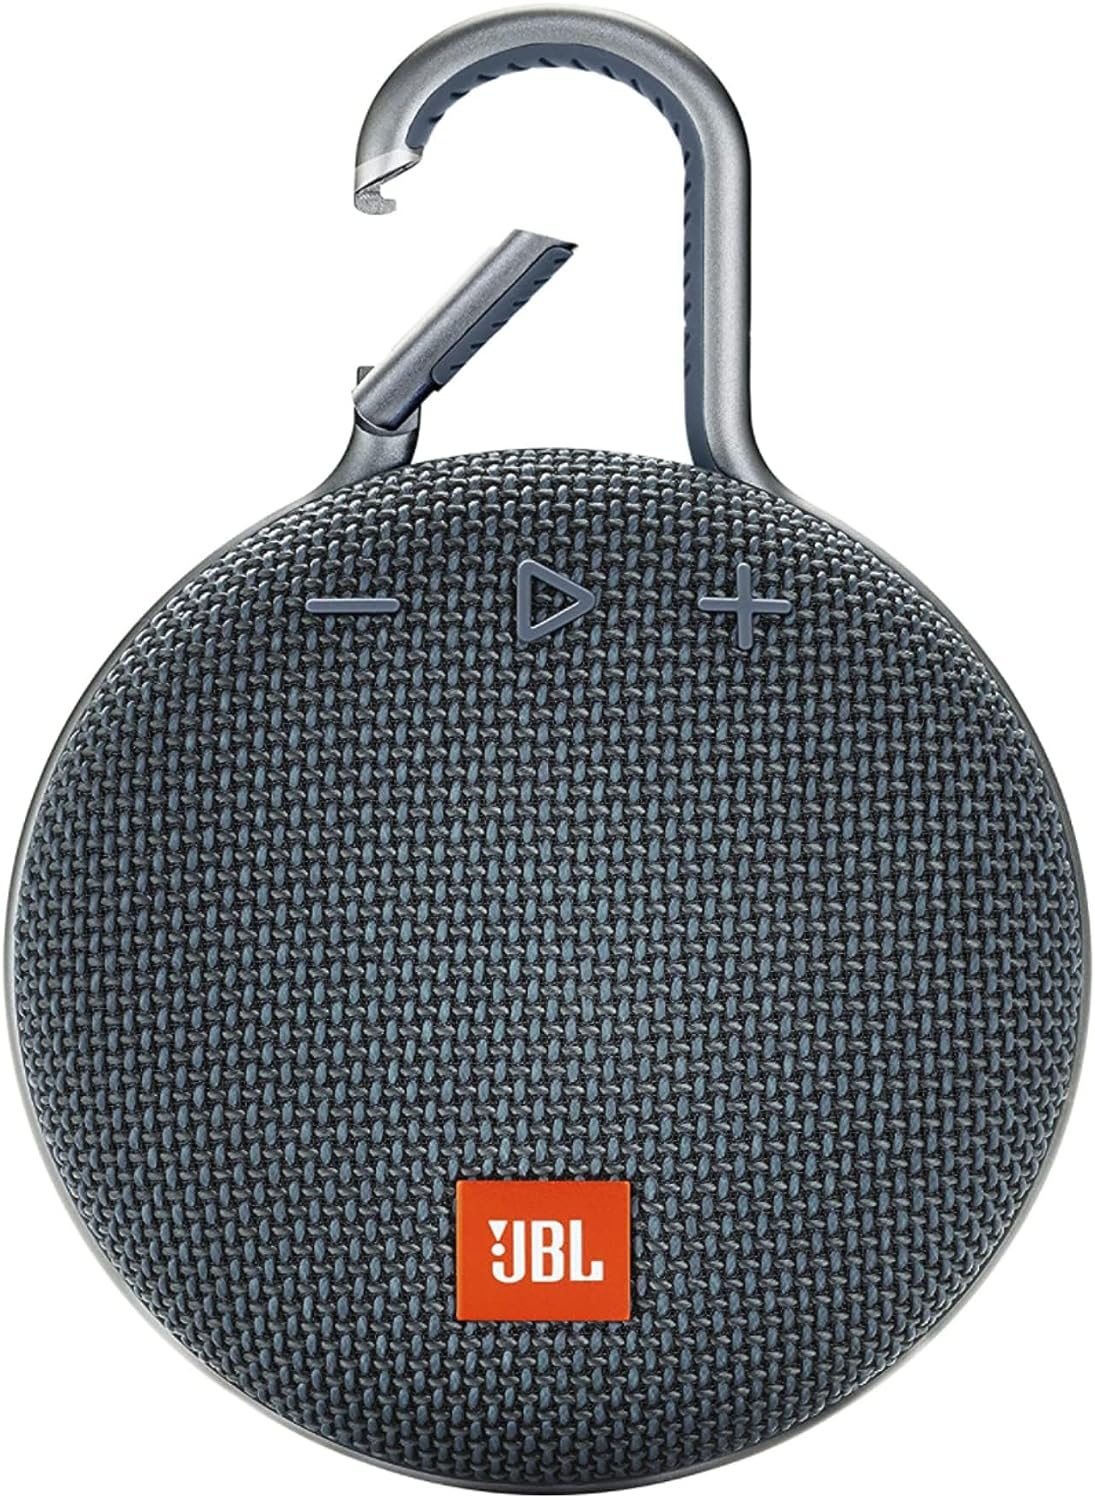 JBL Clip 3, negro - Altavoz Bluetooth impermeable, duradero y